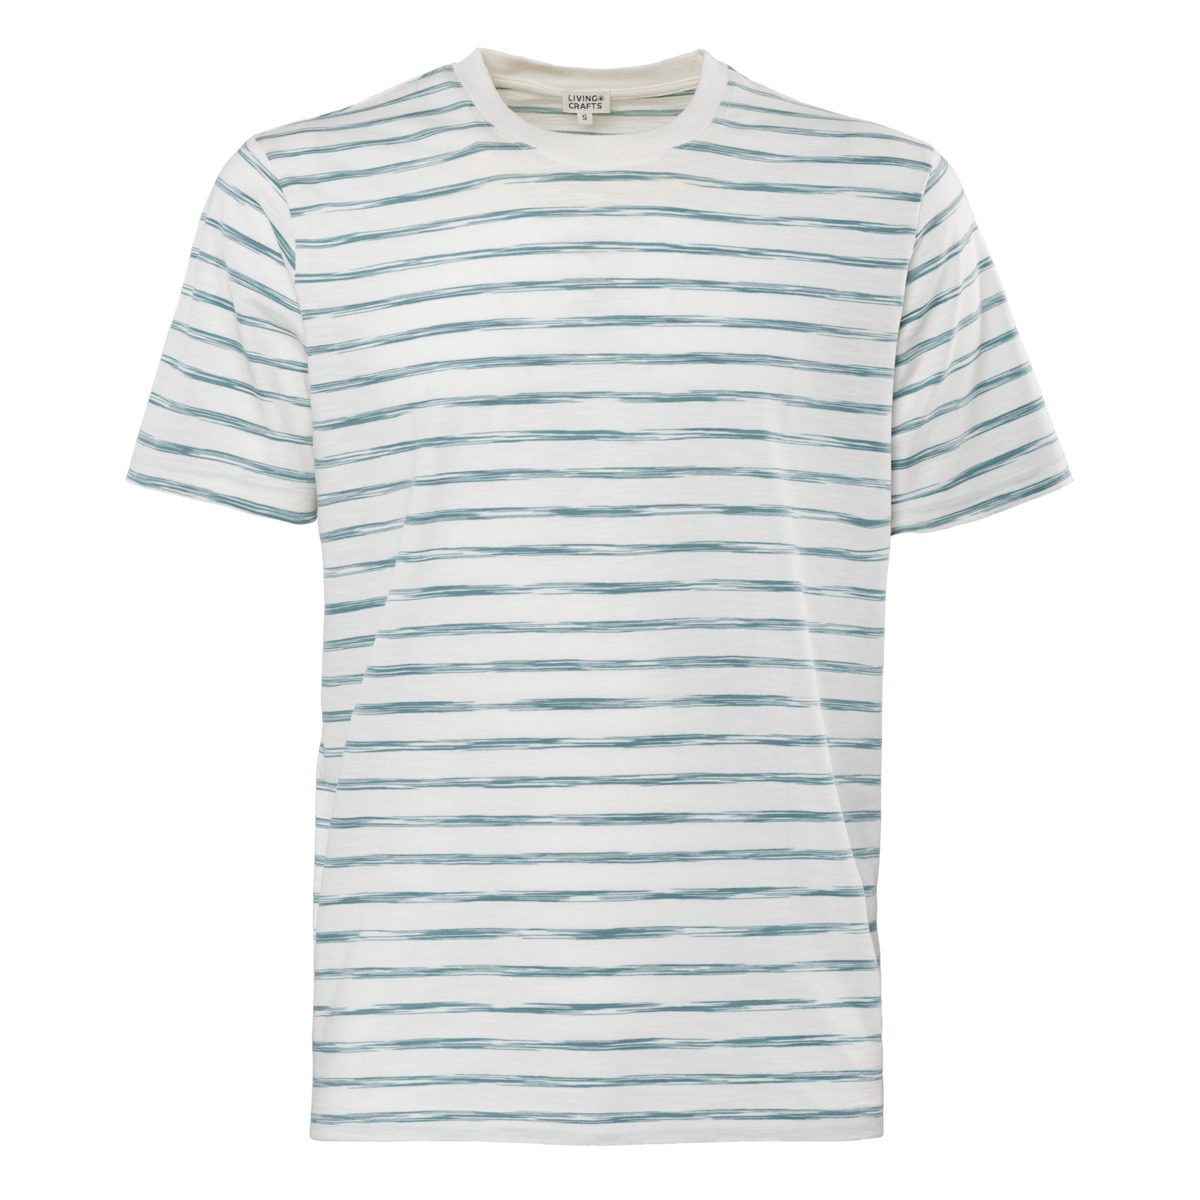 Striped T-shirt, ODIN